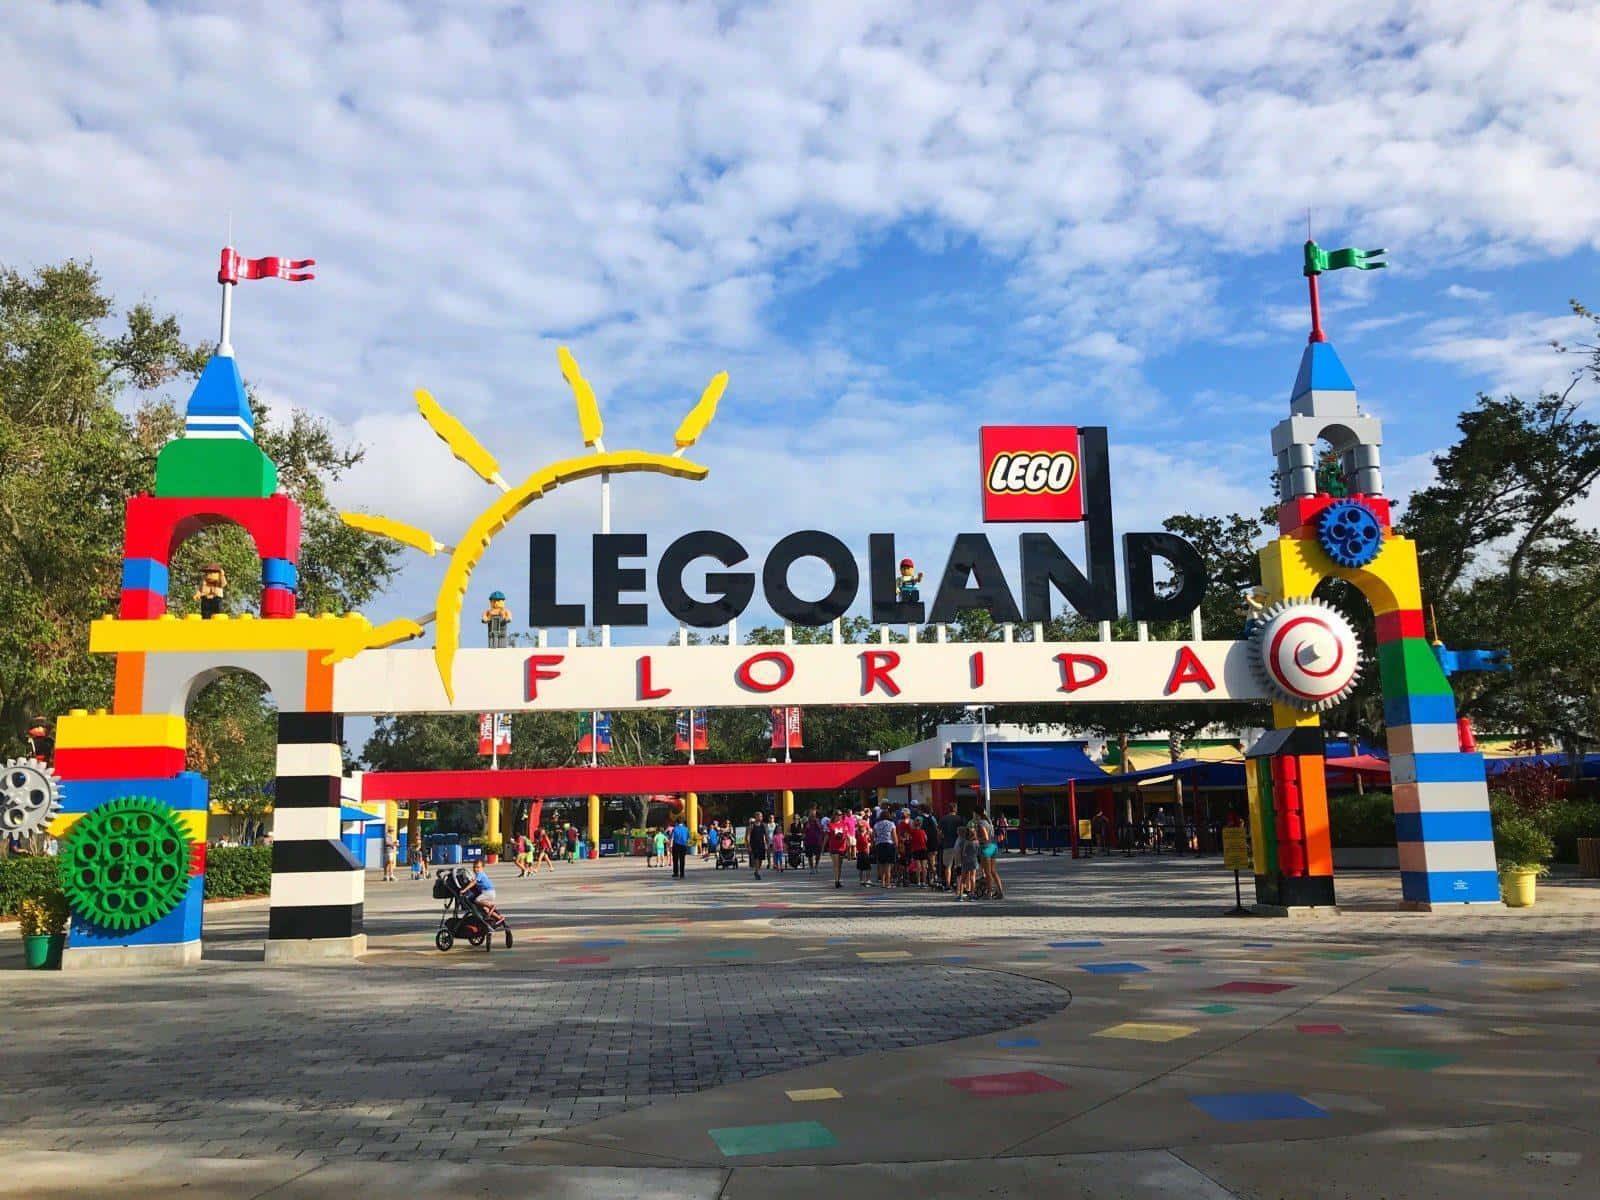 Adventure Awaits at Legoland!